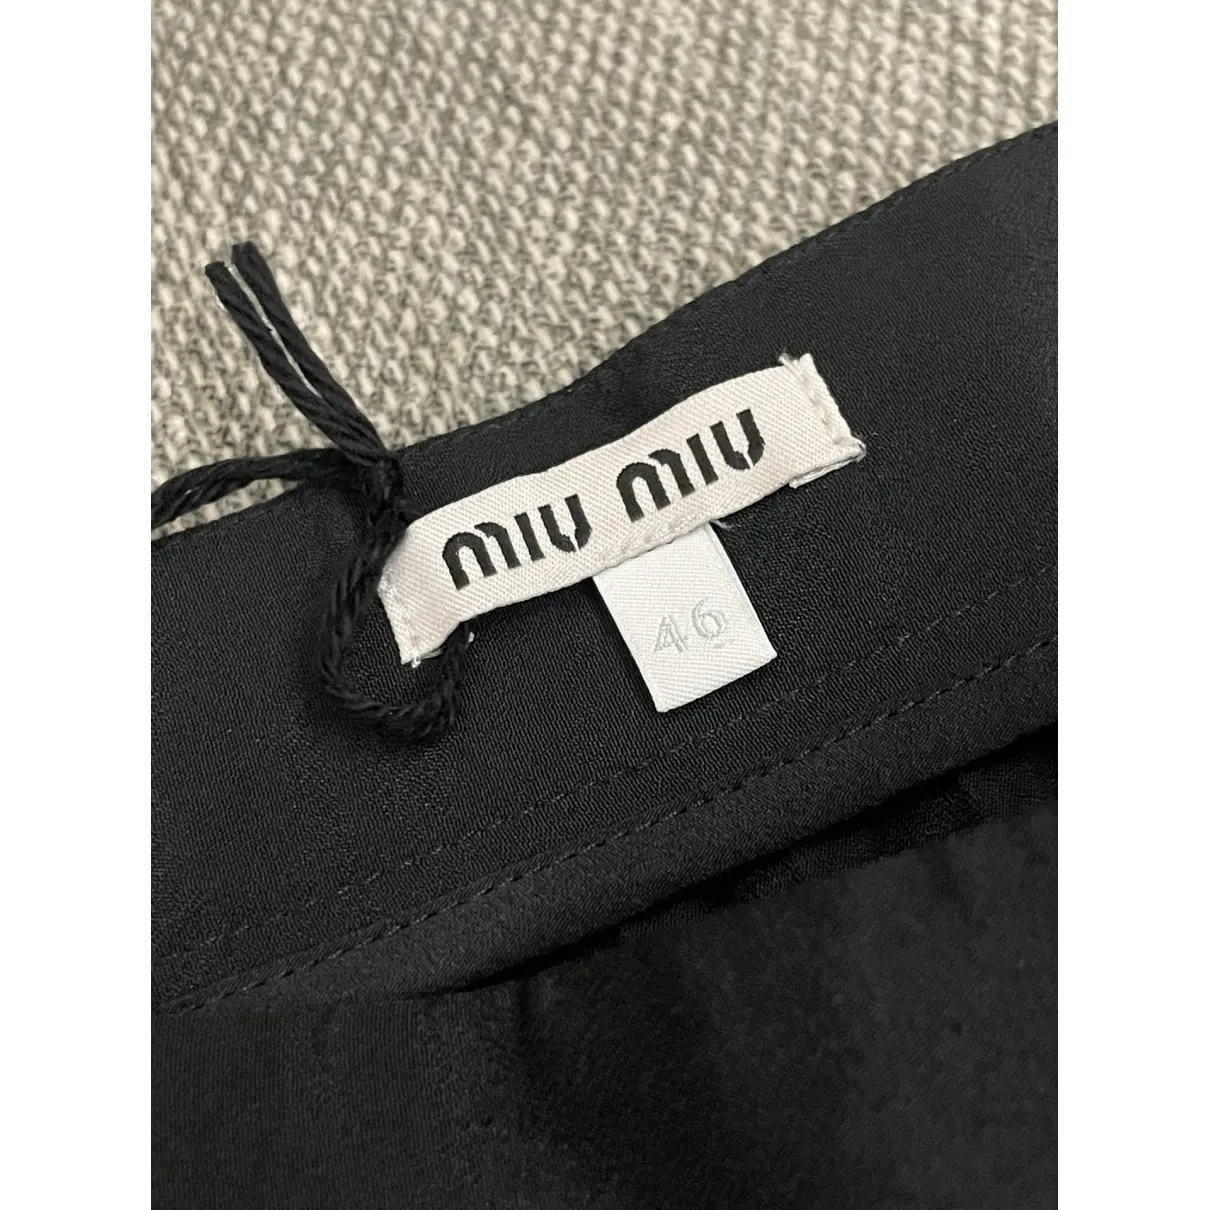 Buy Miu Miu Mid-length skirt online